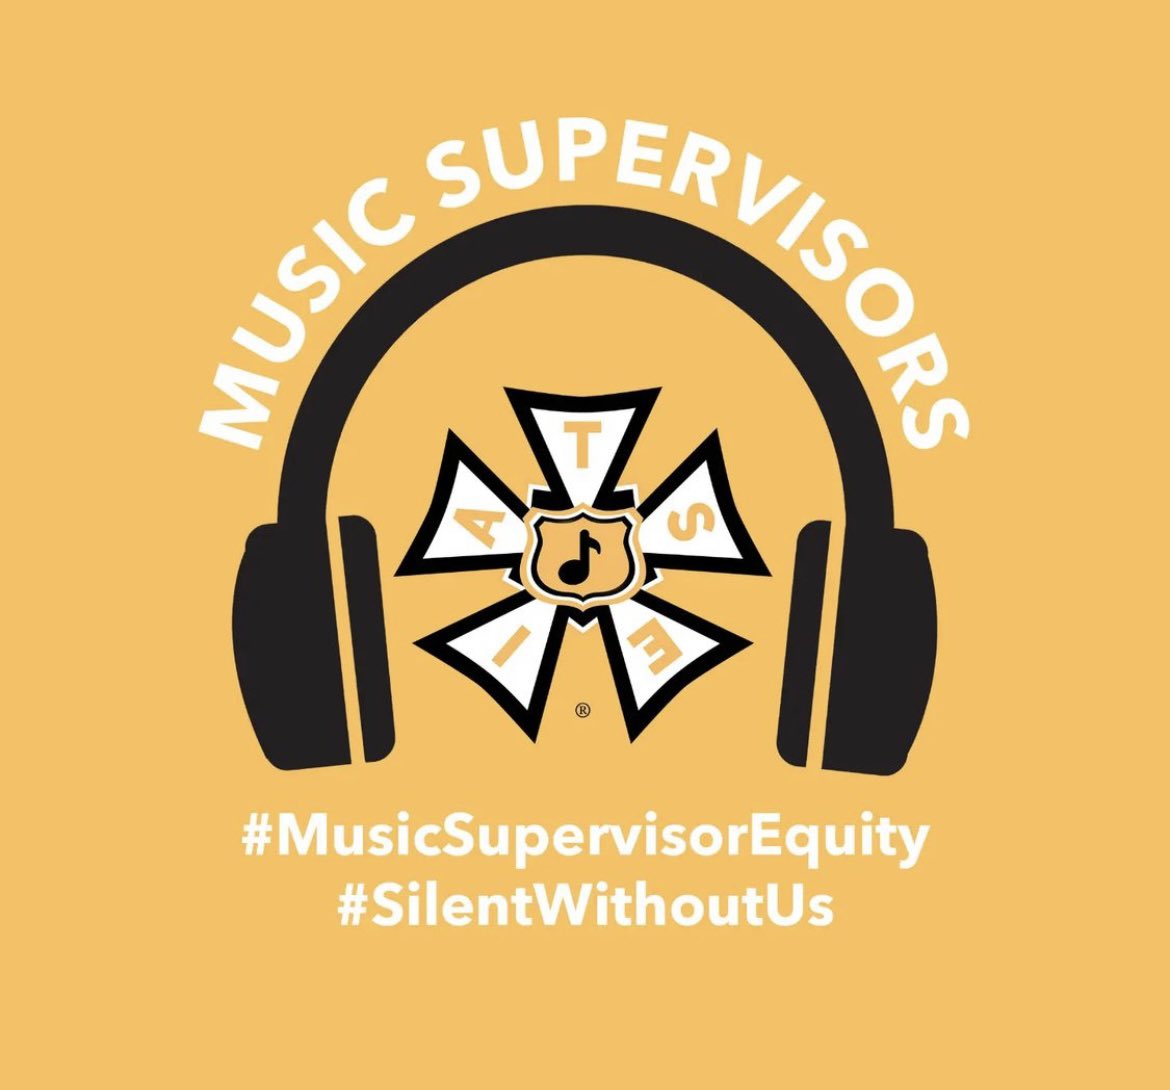 #MusicSupervisorEquity #SilentWithoutUs